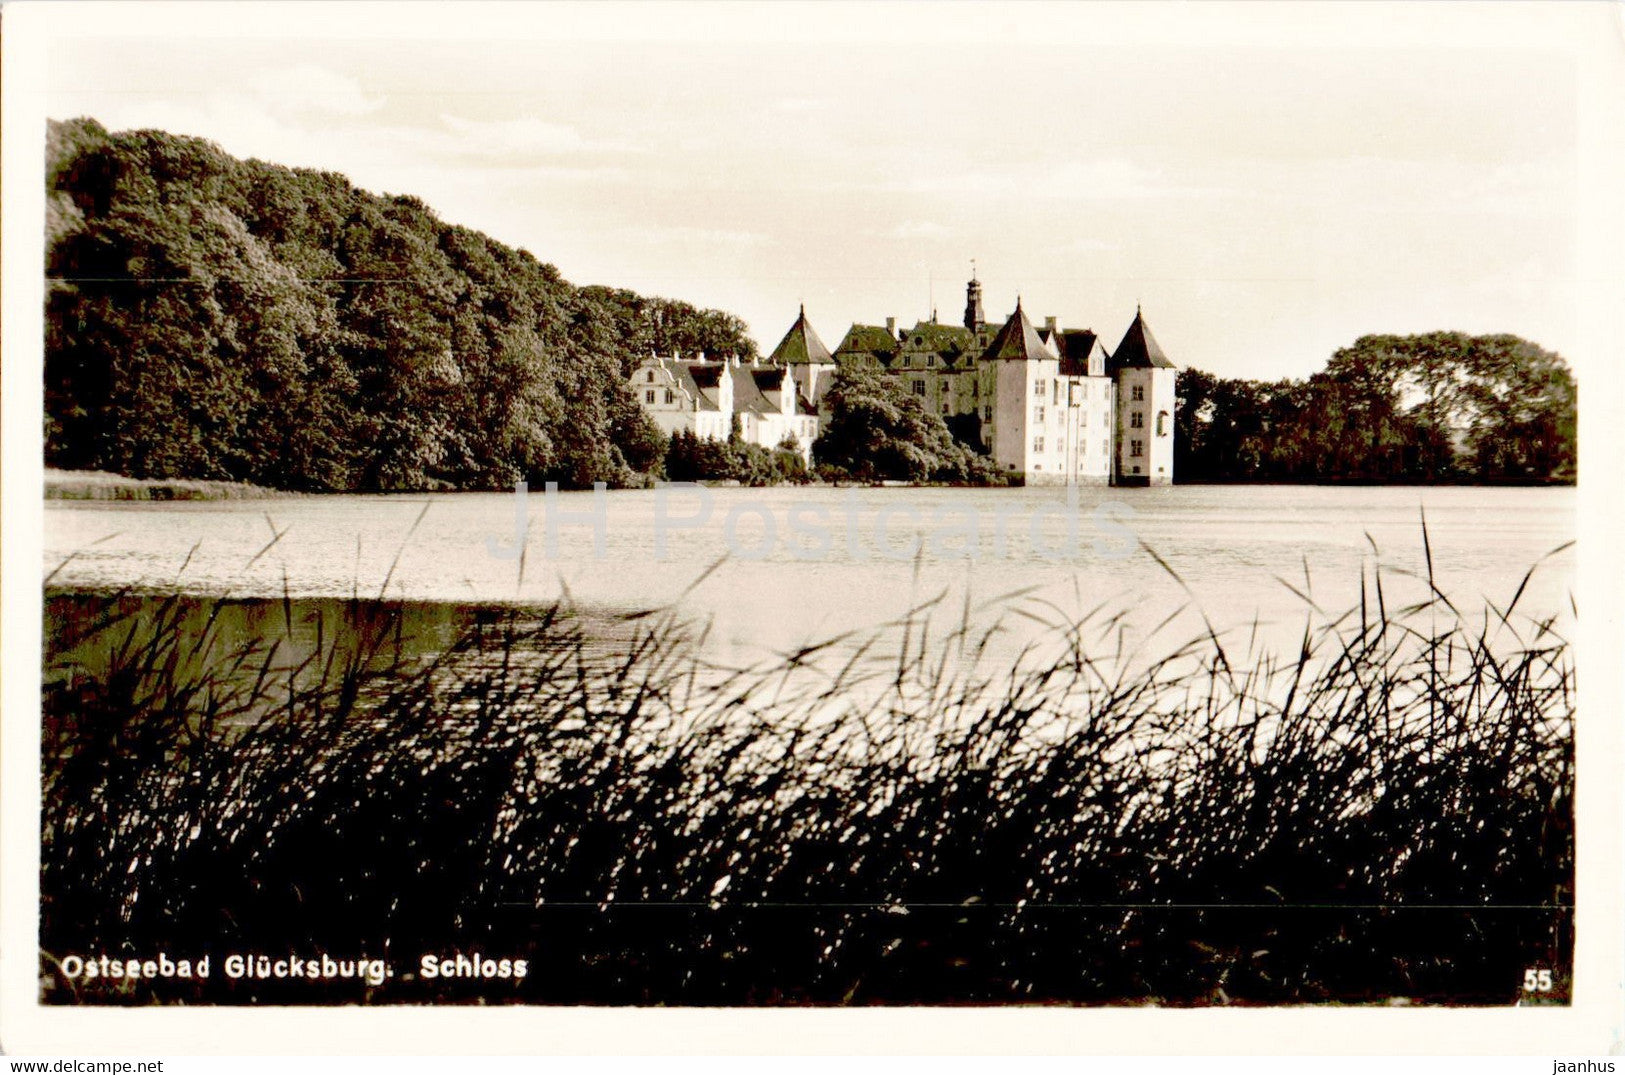 Ostseebad Glucksburg - Schloss - castle - old postcard - Germany - used - JH Postcards